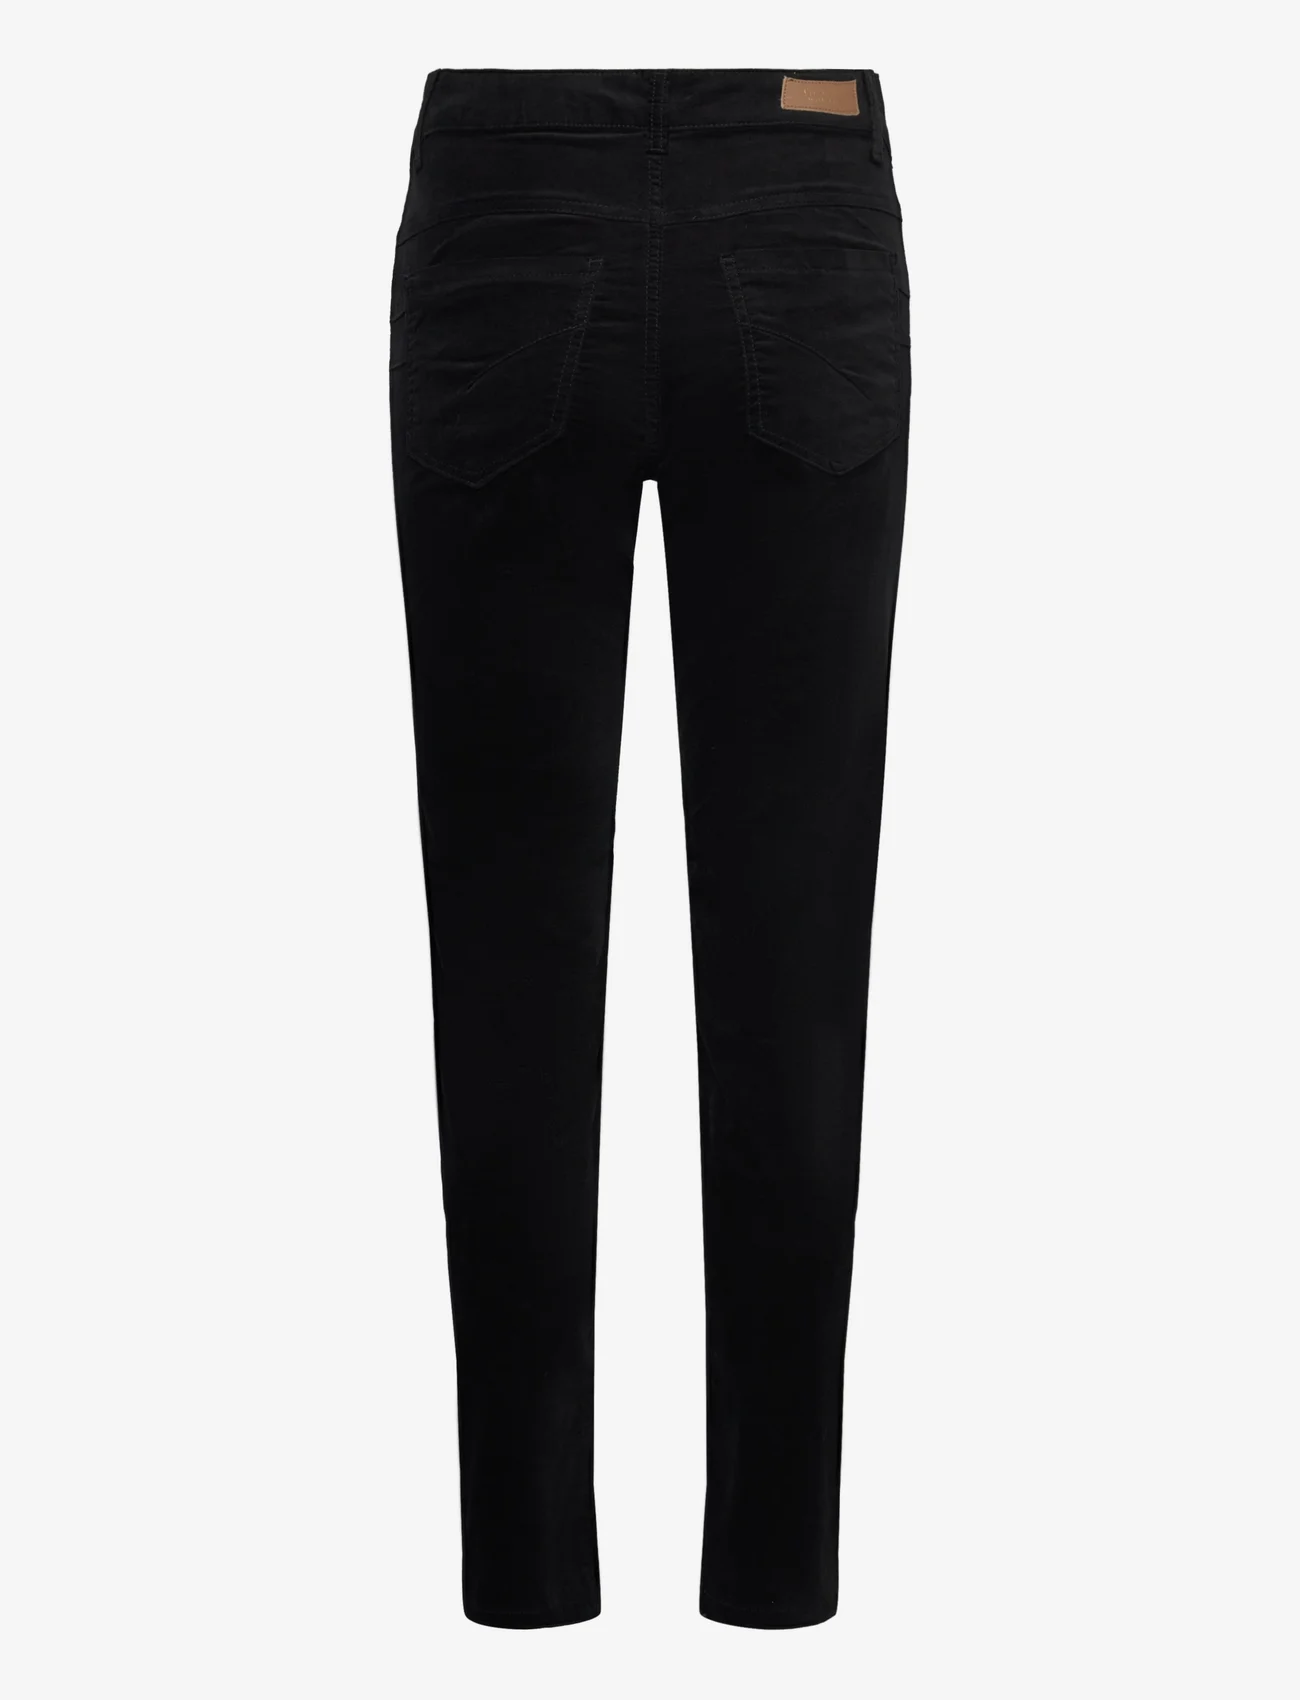 Claire Woman - Janina-CW - Jeans - slim jeans - black - 1